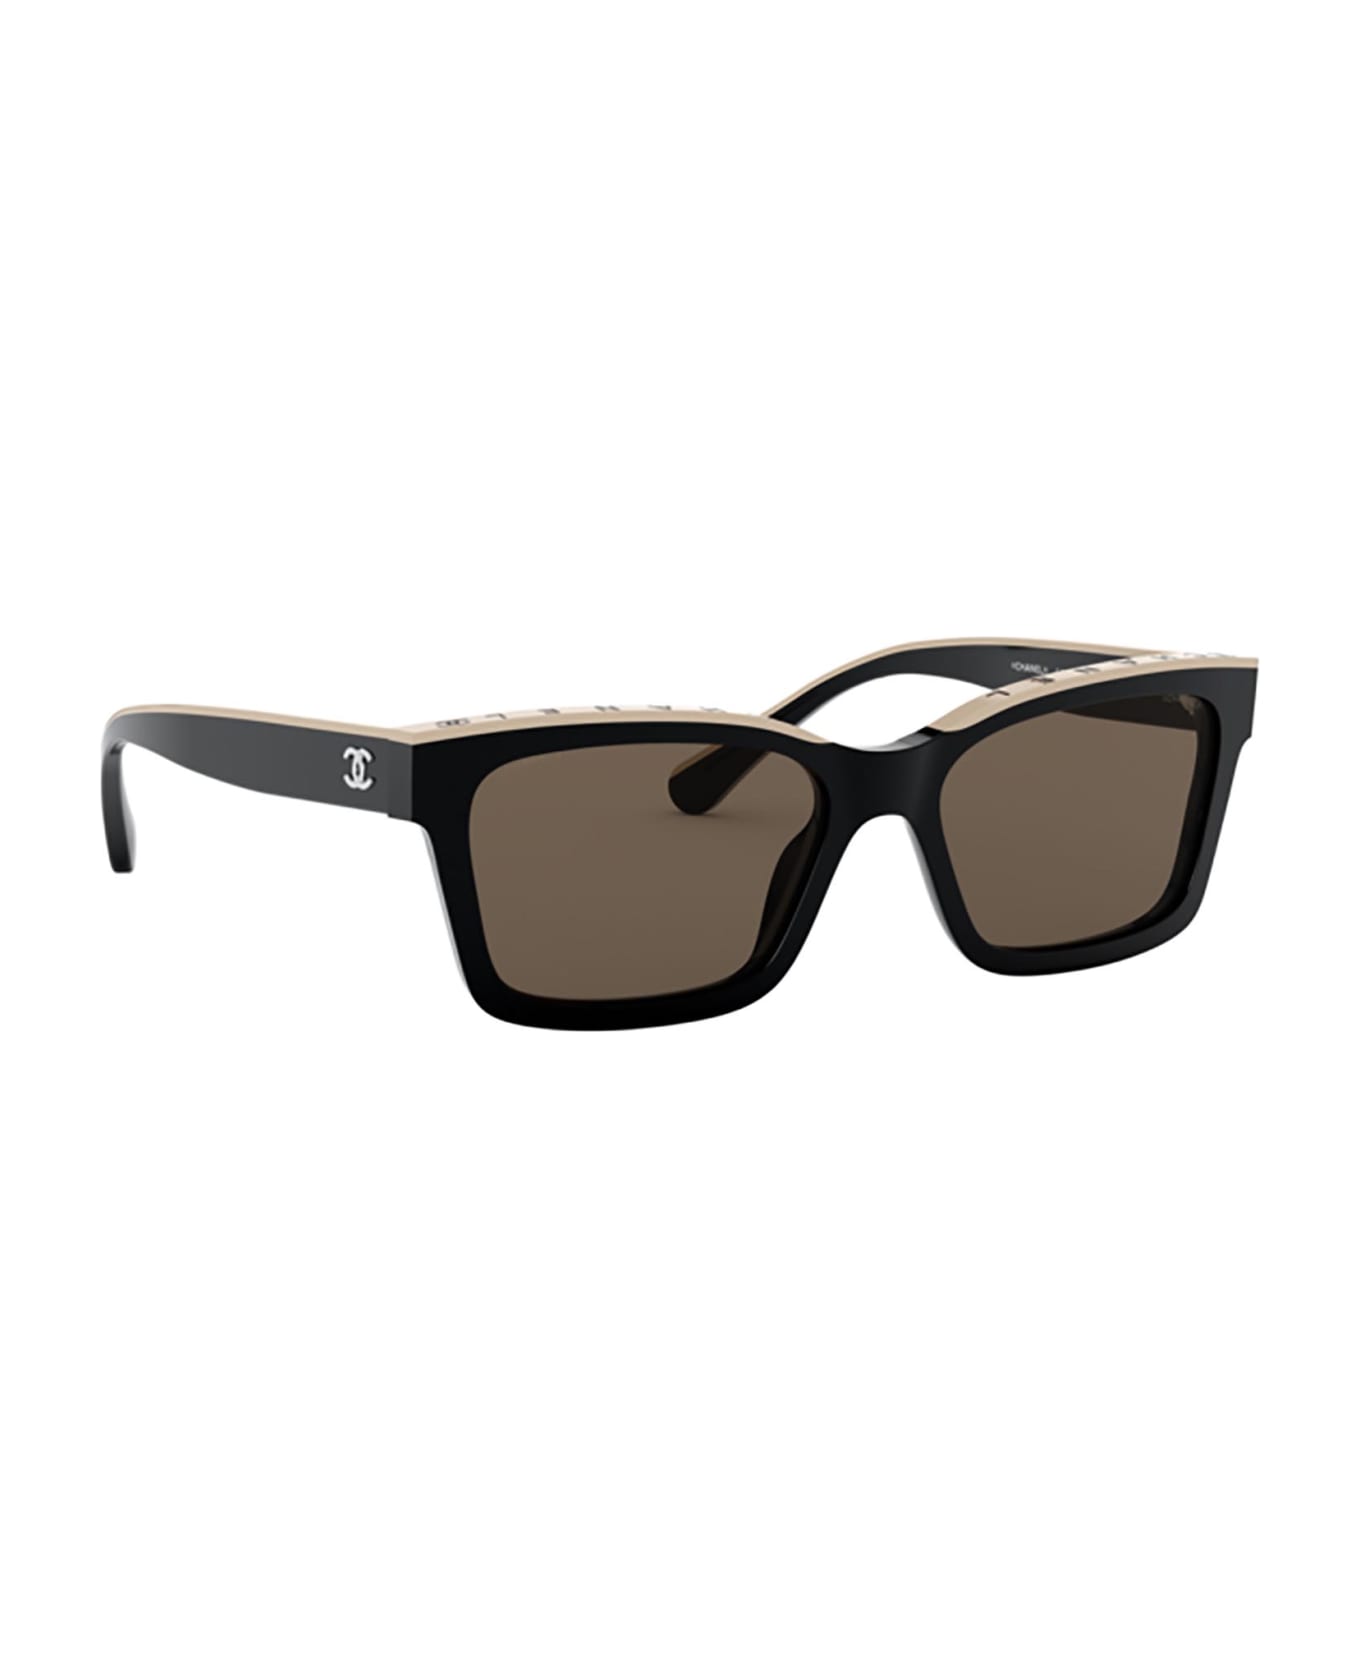 Chanel Chanel Ch5417 Black/beige Sunglasses